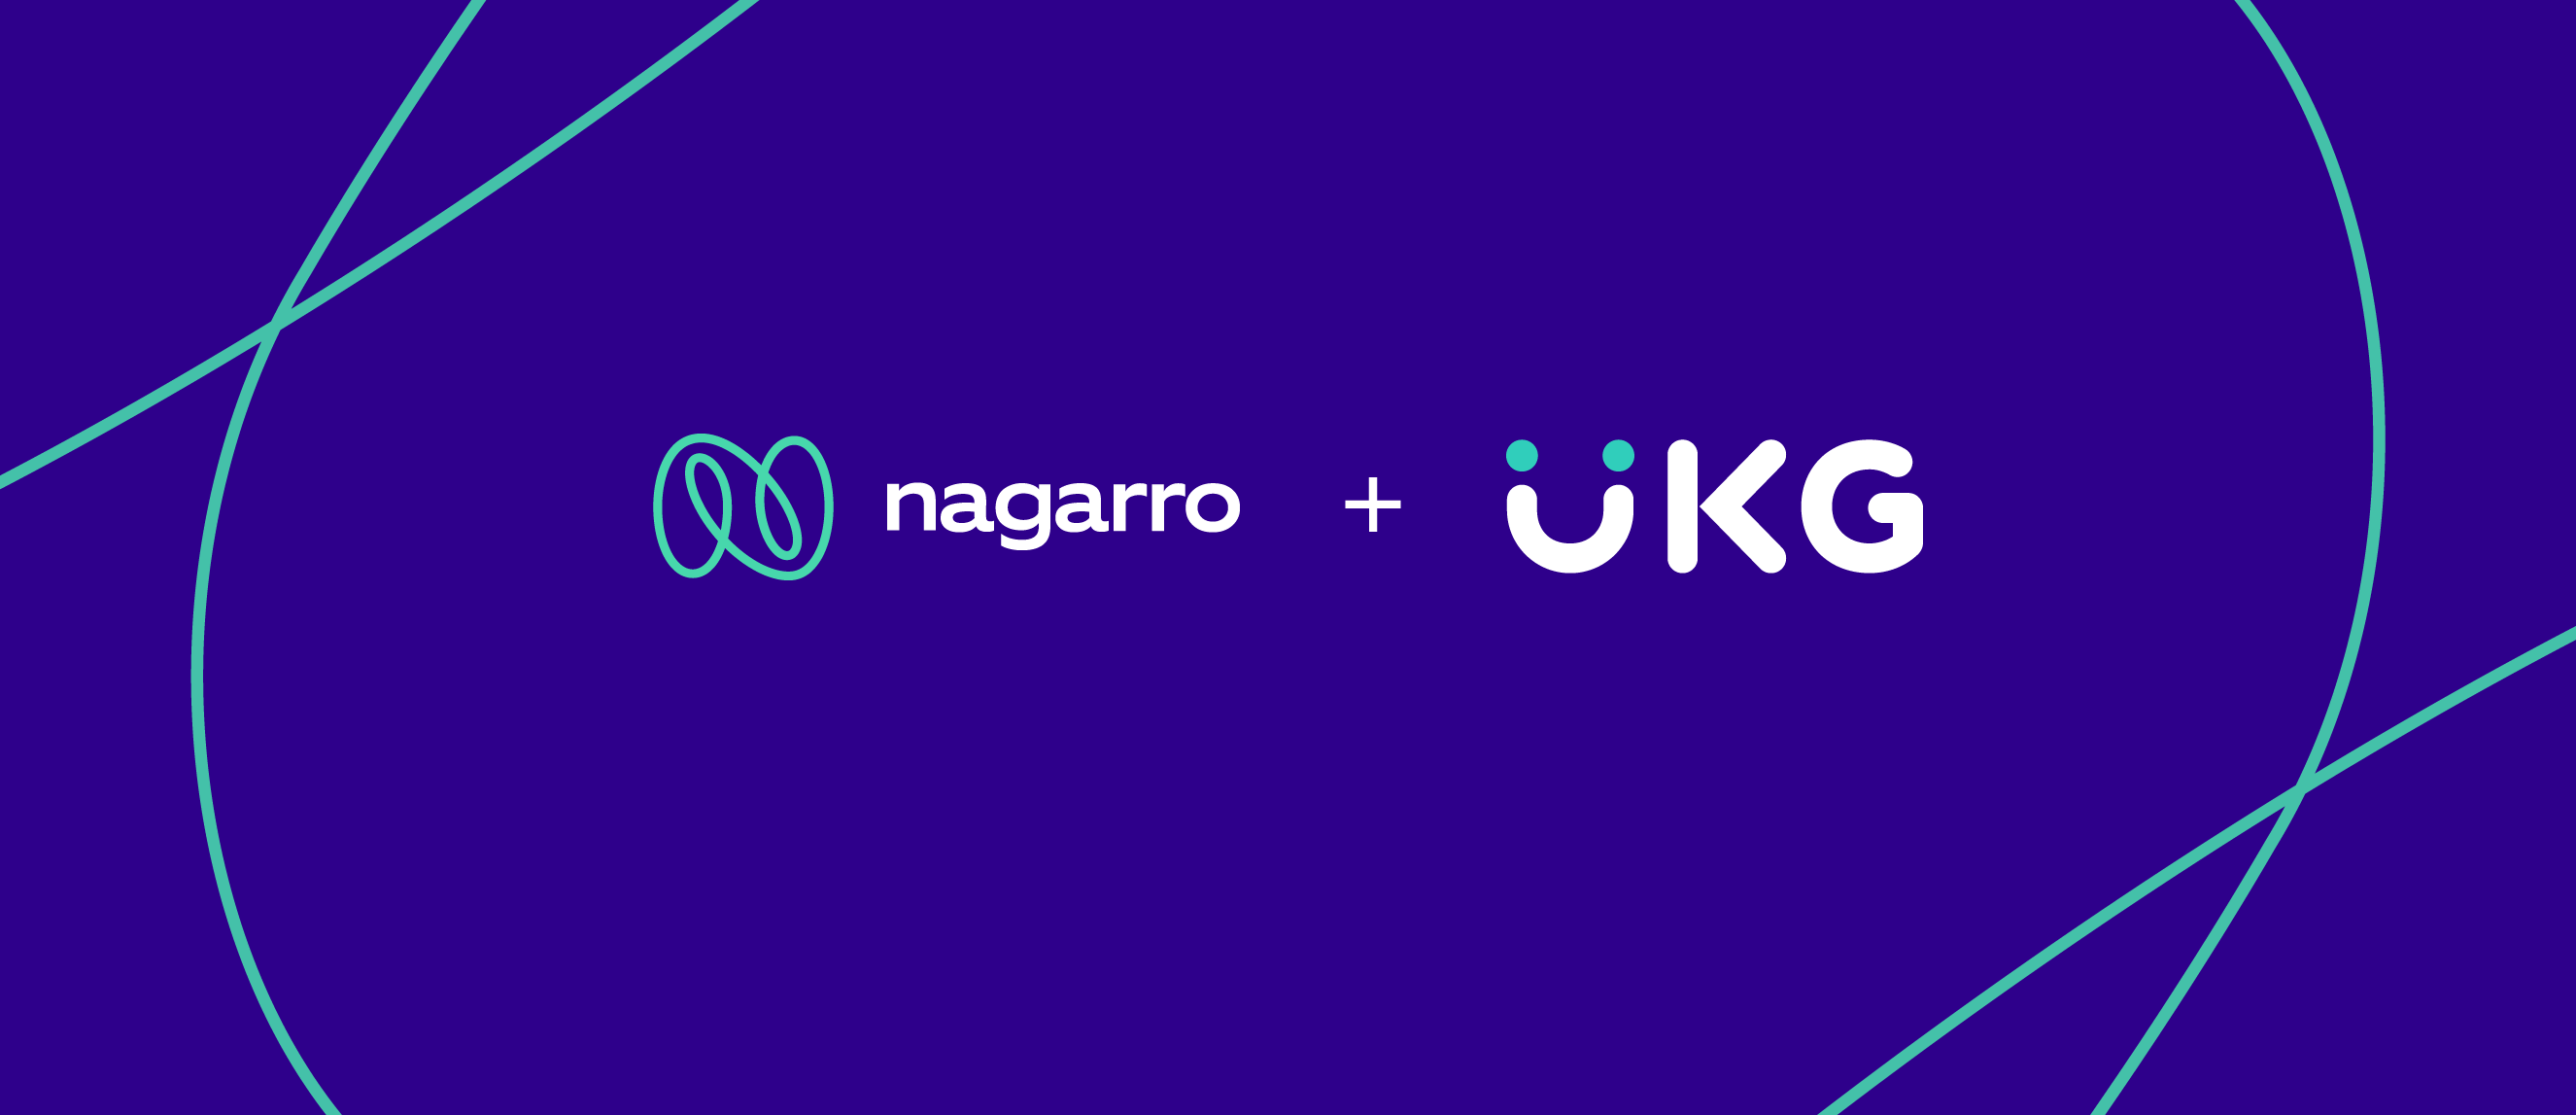 Nagarro + UKG_Desktop (1)